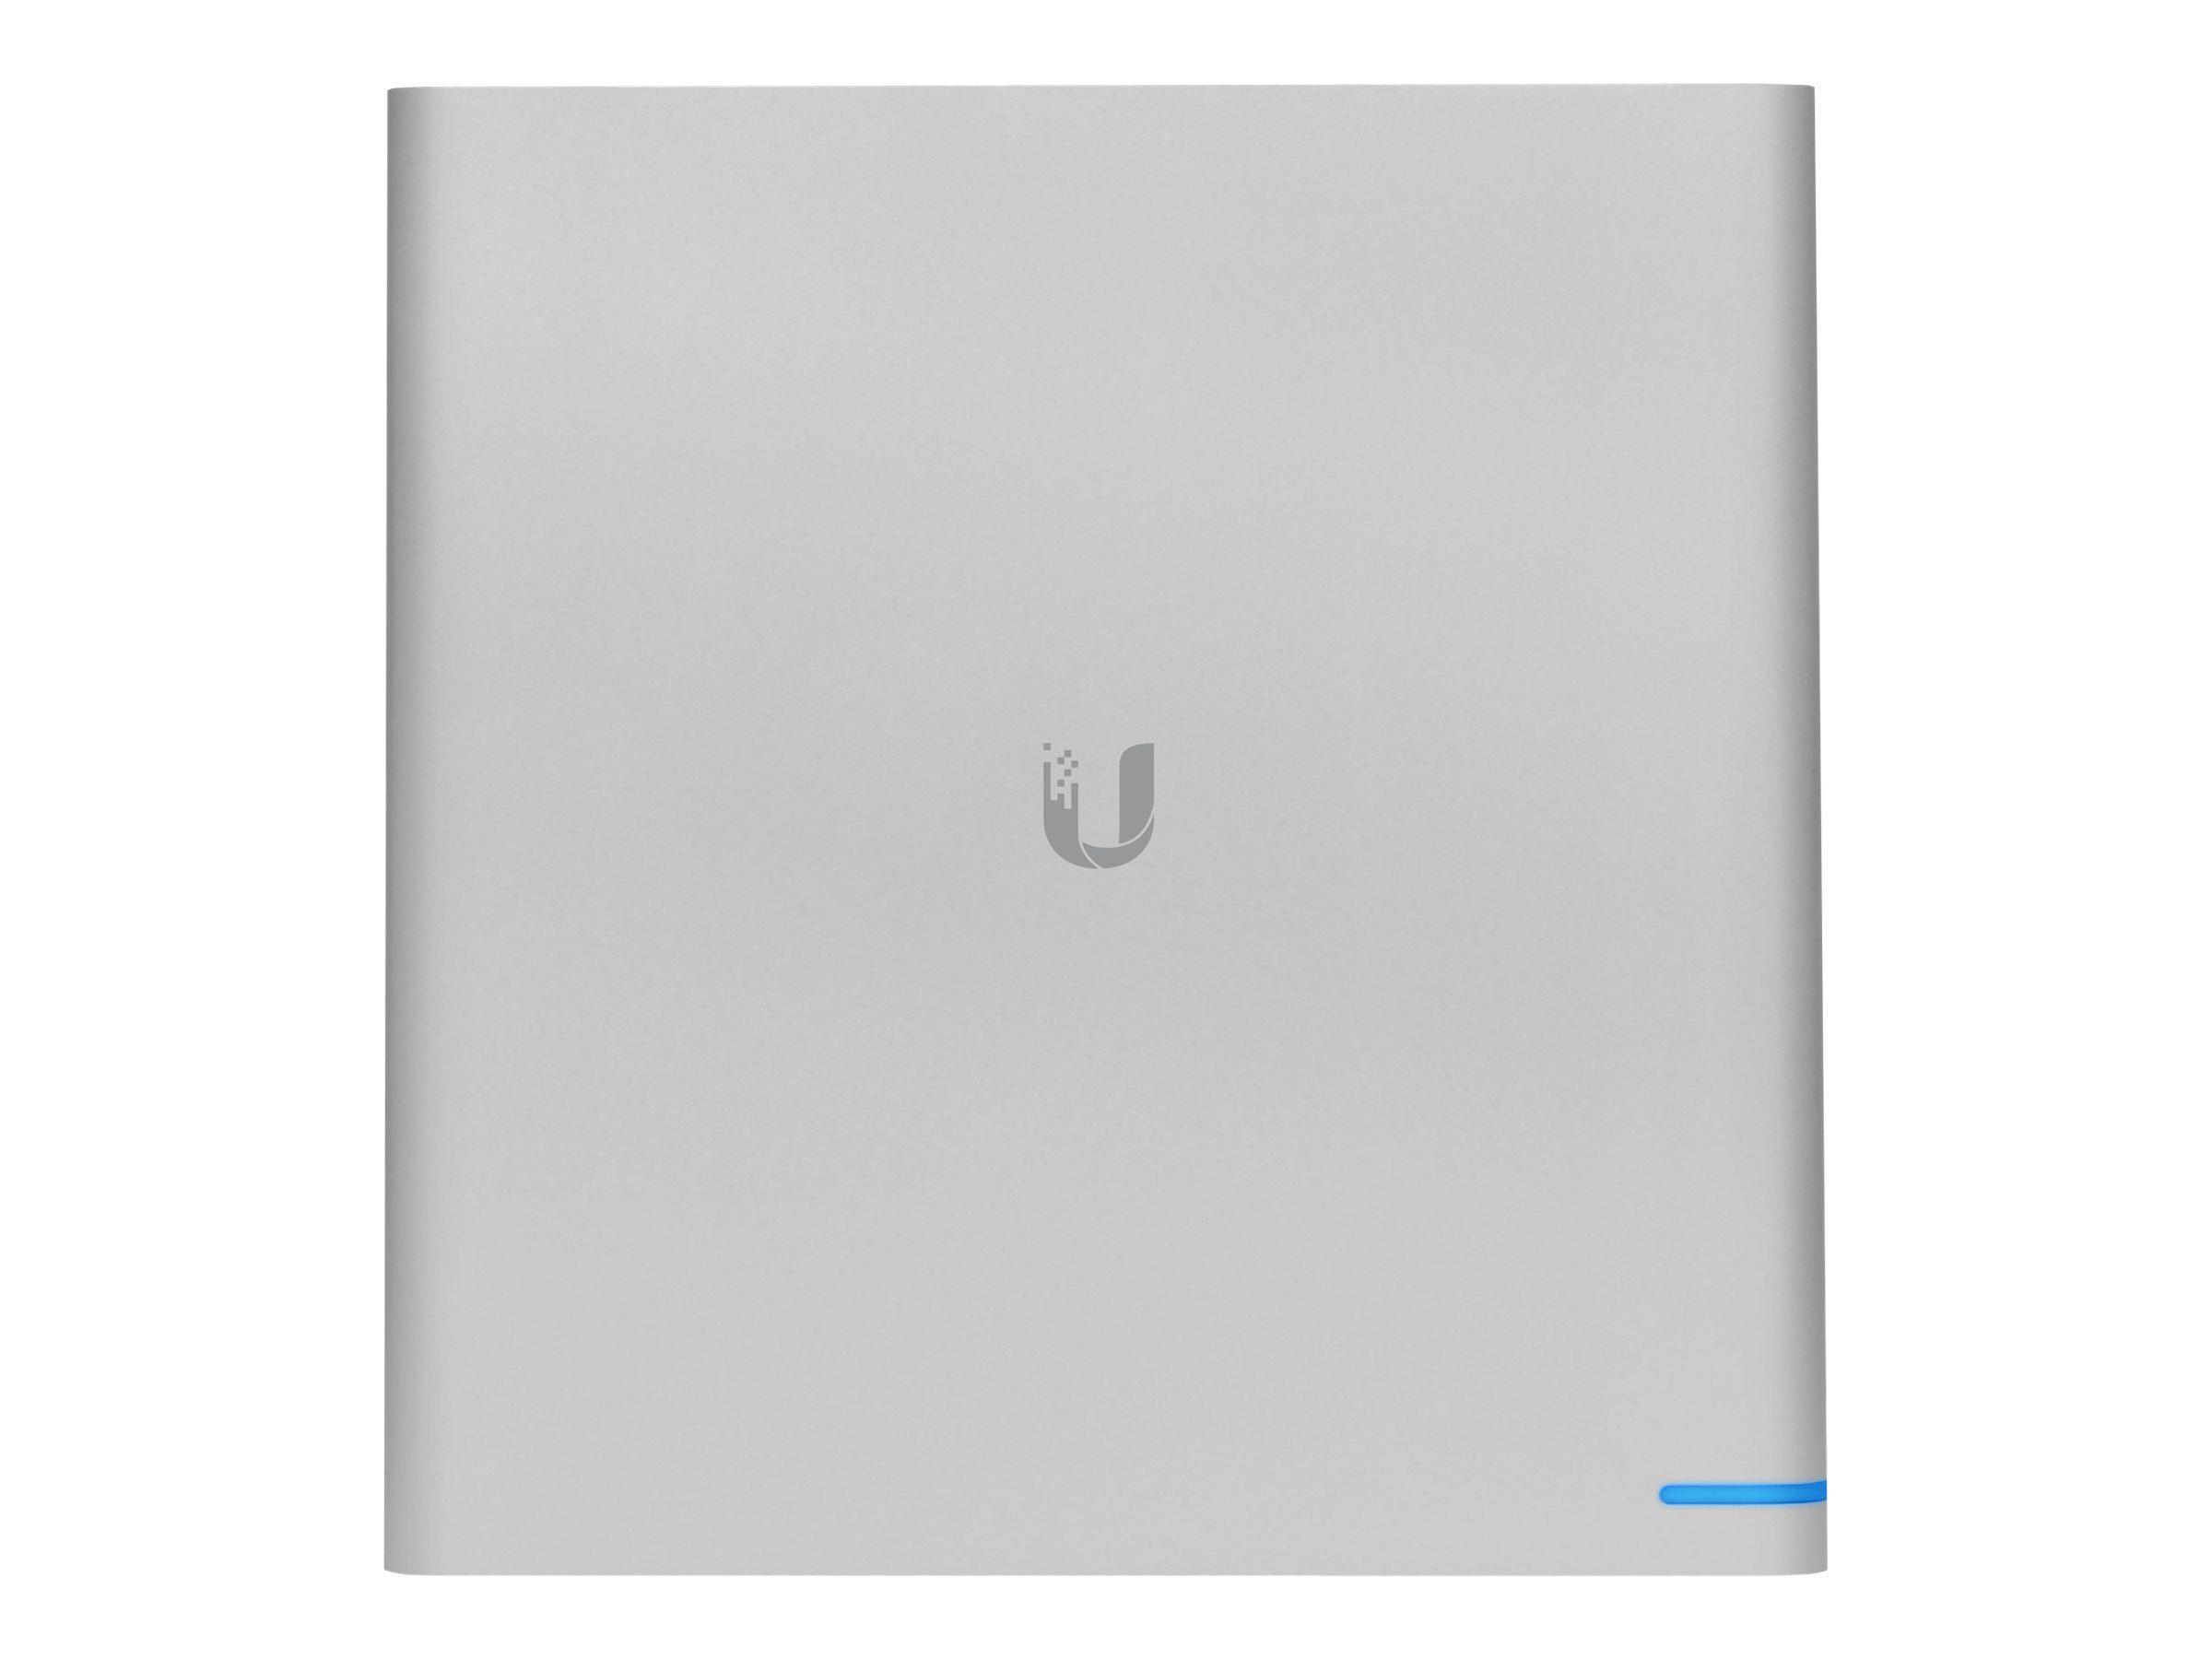 UBIQUITI with NETWORKS UniFi 1TB Ubiquiti Key Netzwerk-Adapter HDD Cloud G2 Networks Ubiquiti